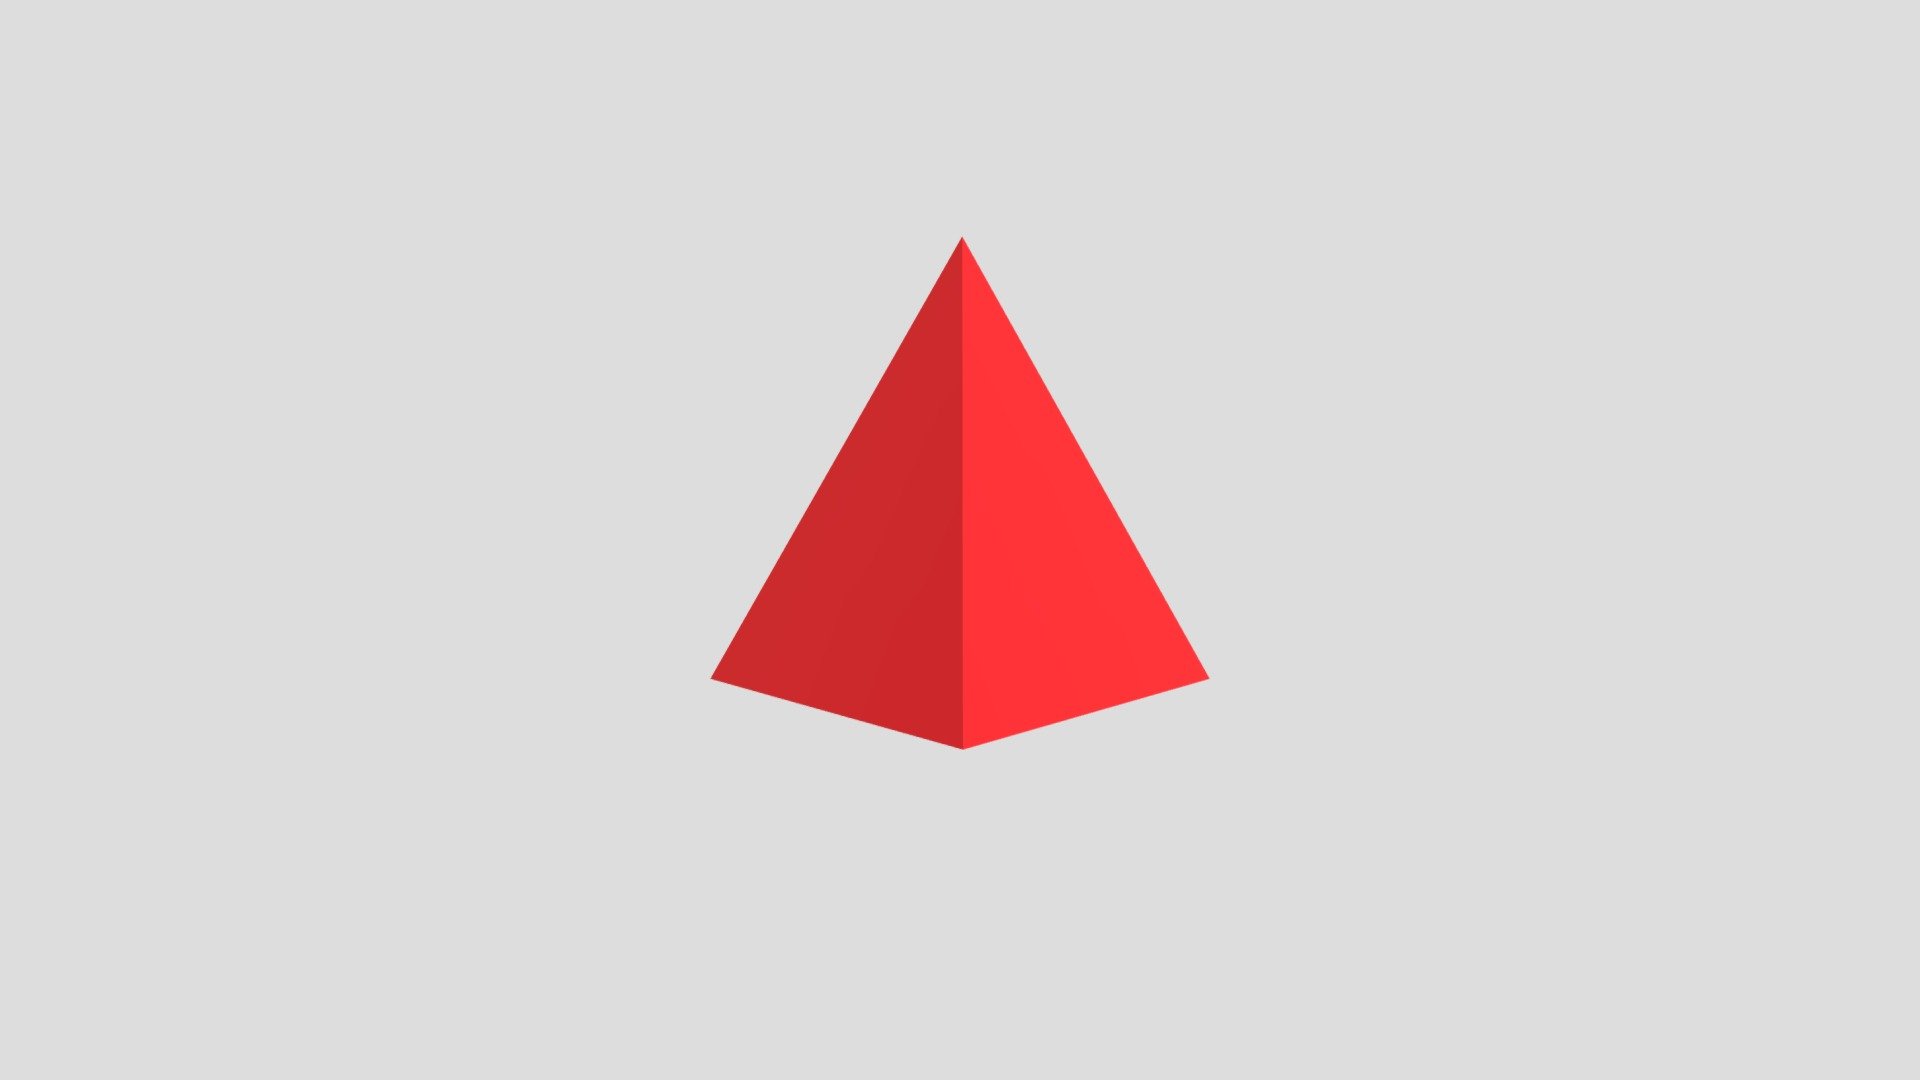 Red Triangular Pyramid